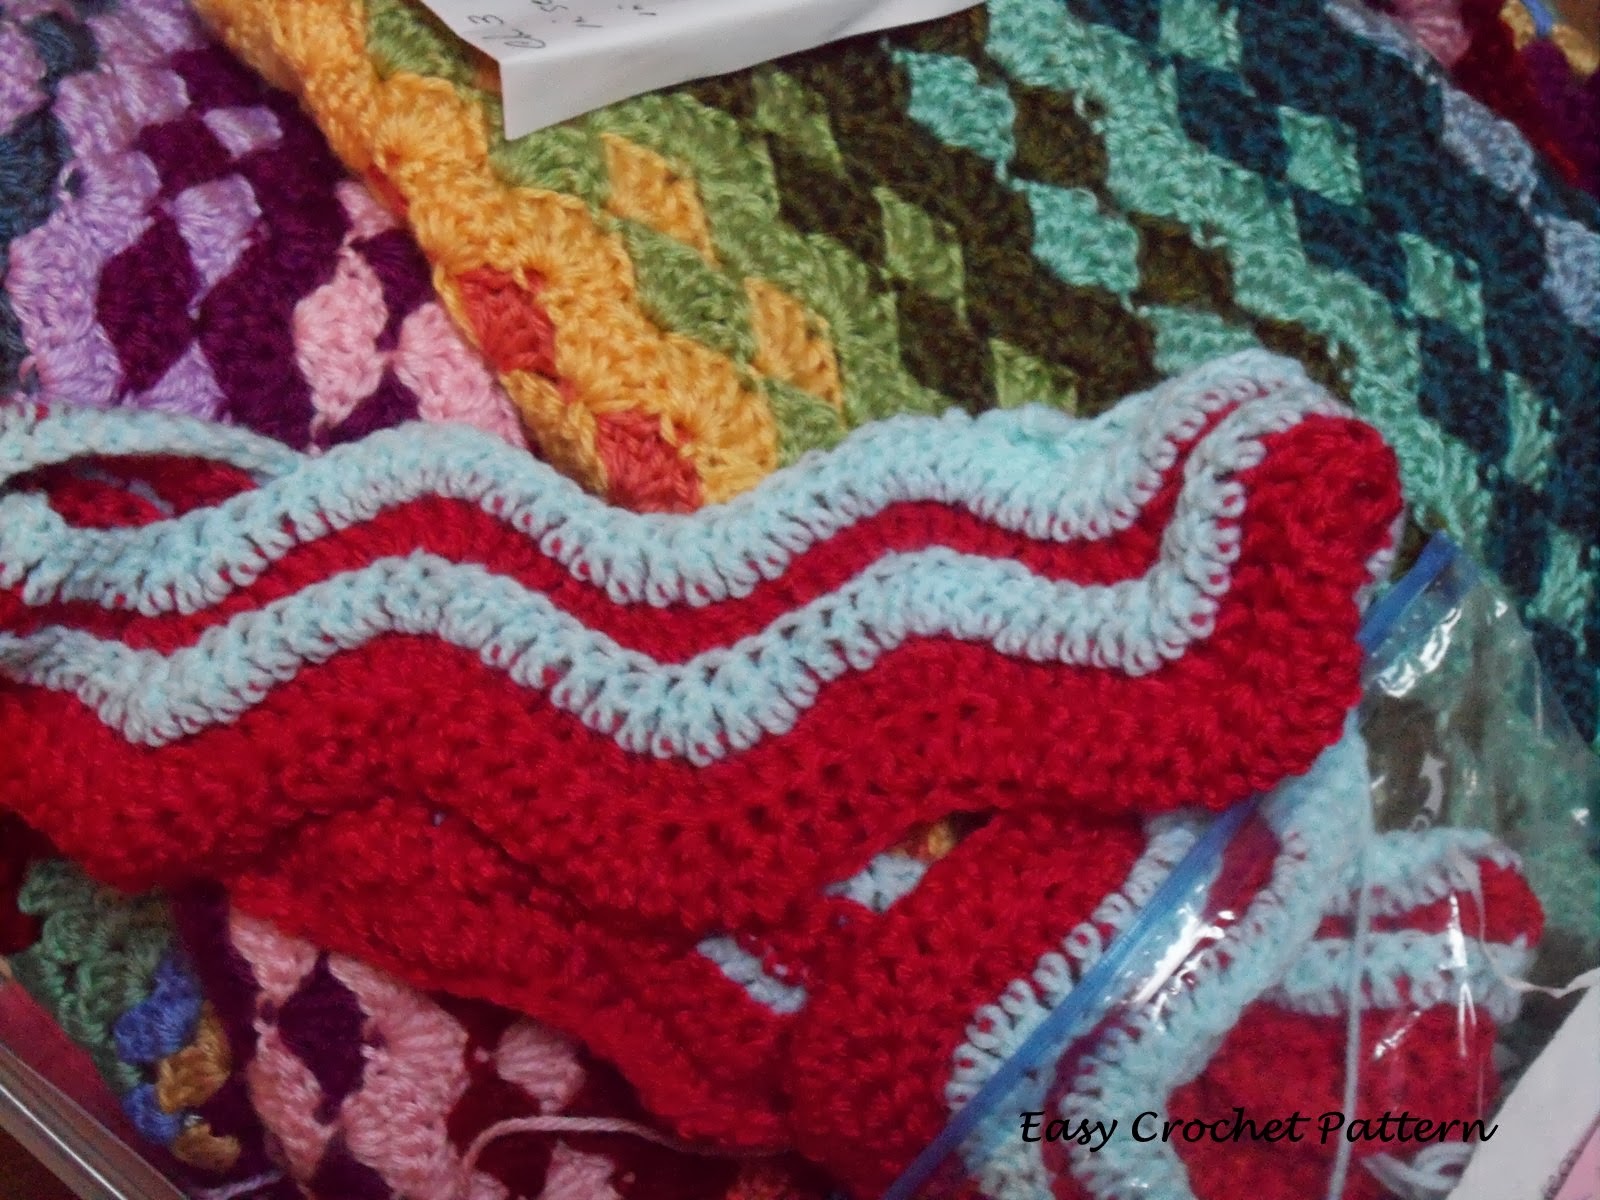 Easy Crochet Pattern: My Crochet UFO Container